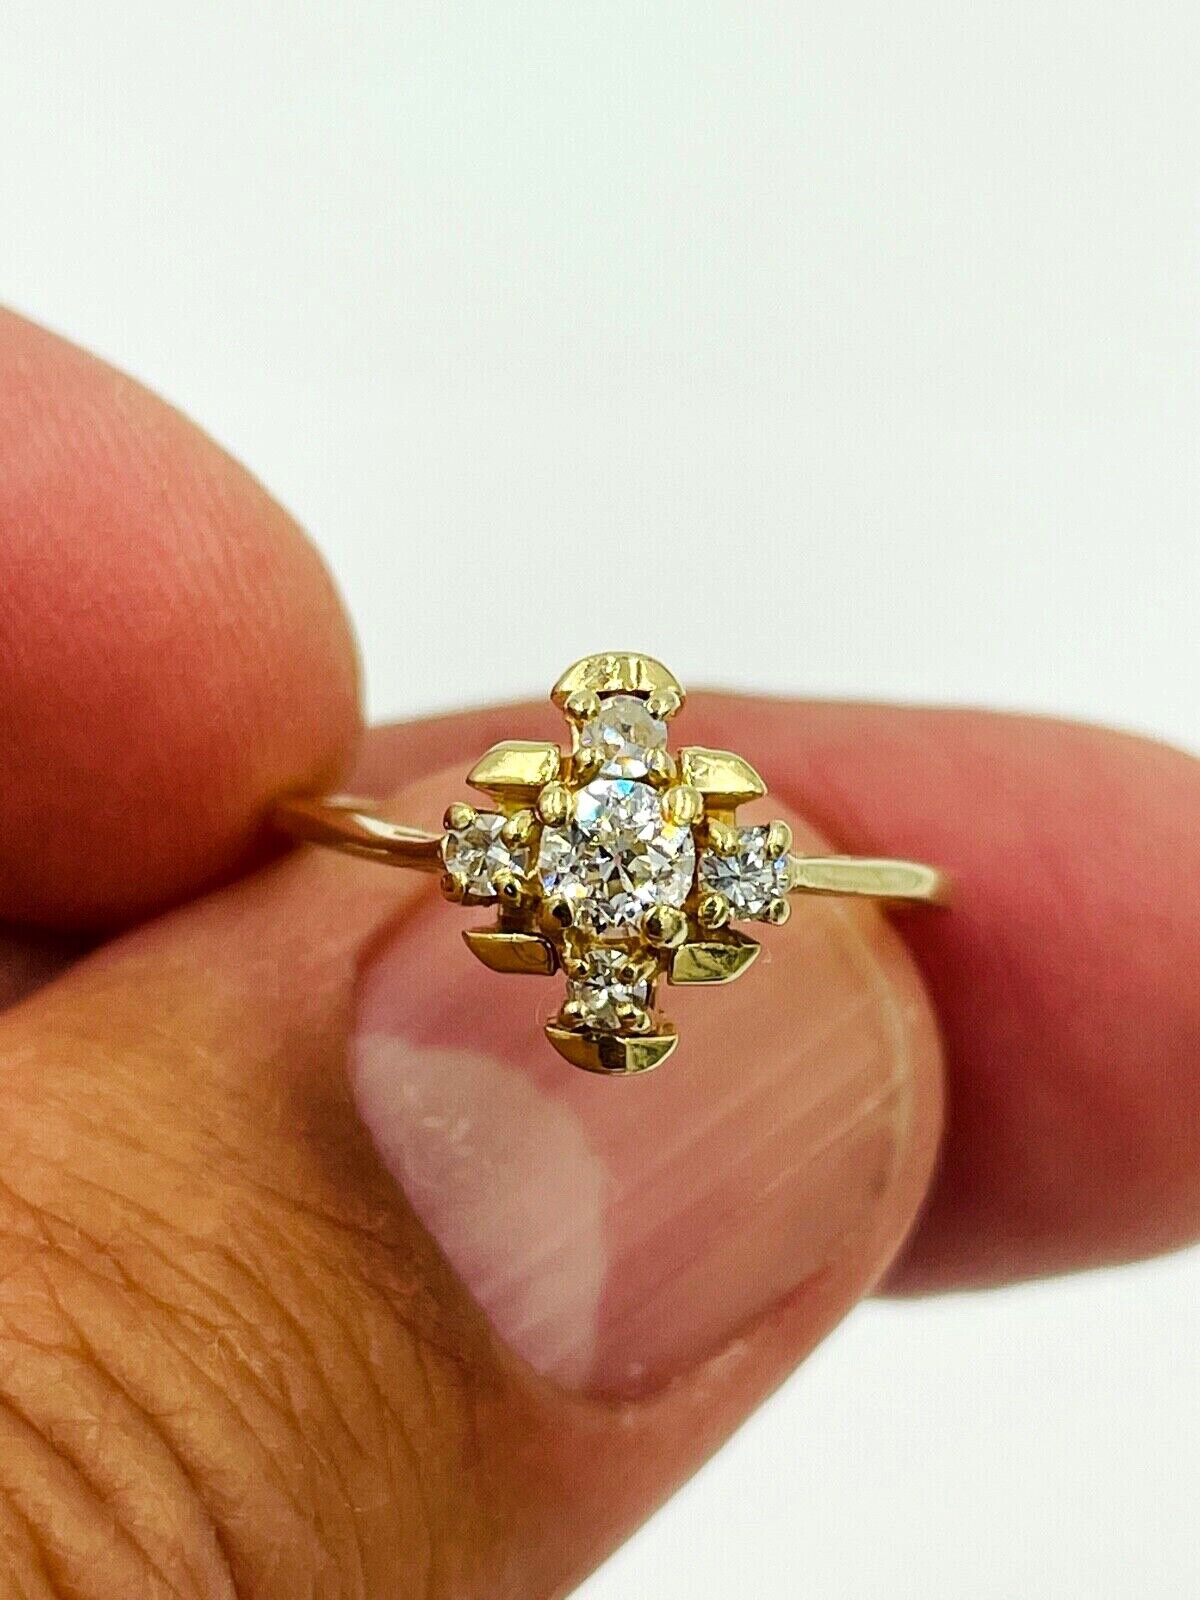 Vintage 14k Yellow Gold Old Mine Cut Diamond Ring .32cts VS